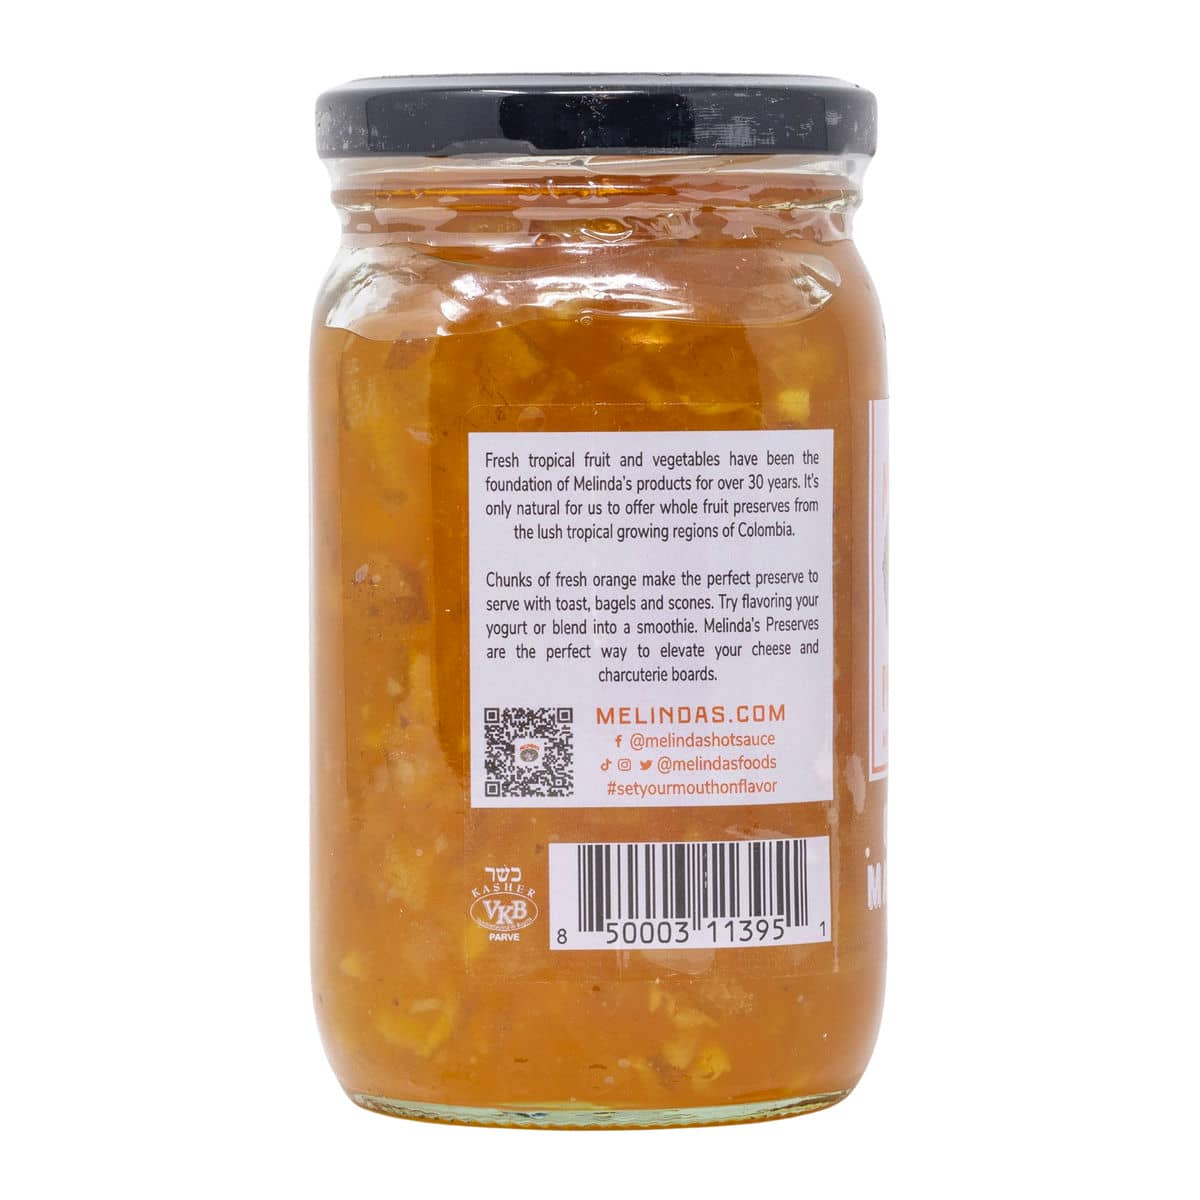 Melinda’s Whole Fruit Preserves Orange Marmalade Description